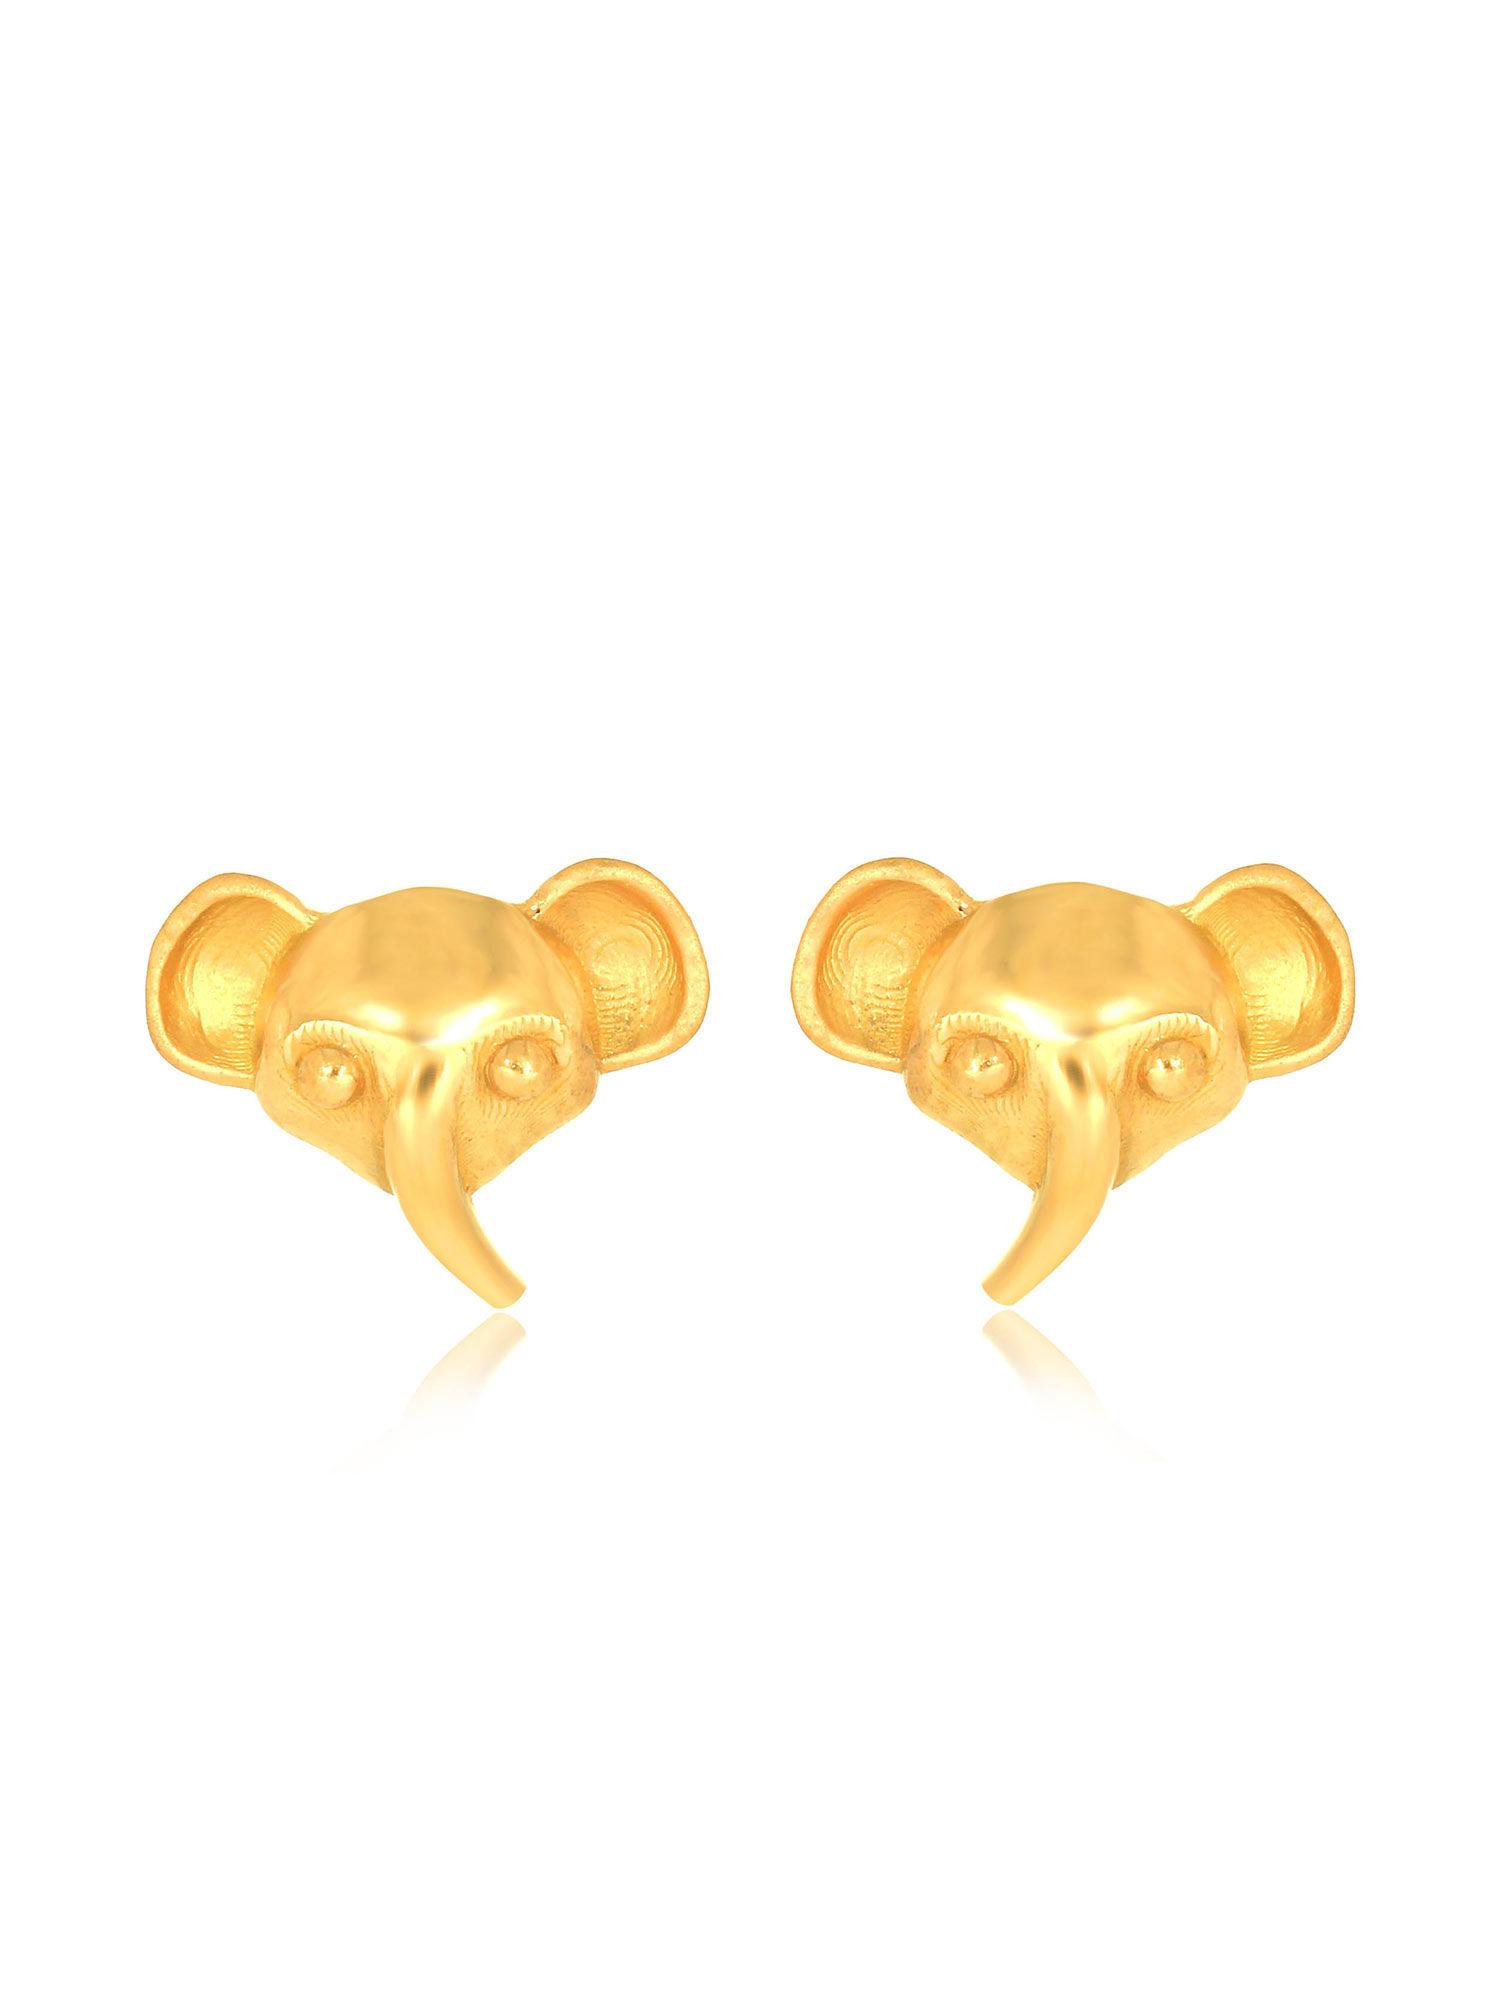 gold 22k yellow gold little elephant gold baby studs earrings